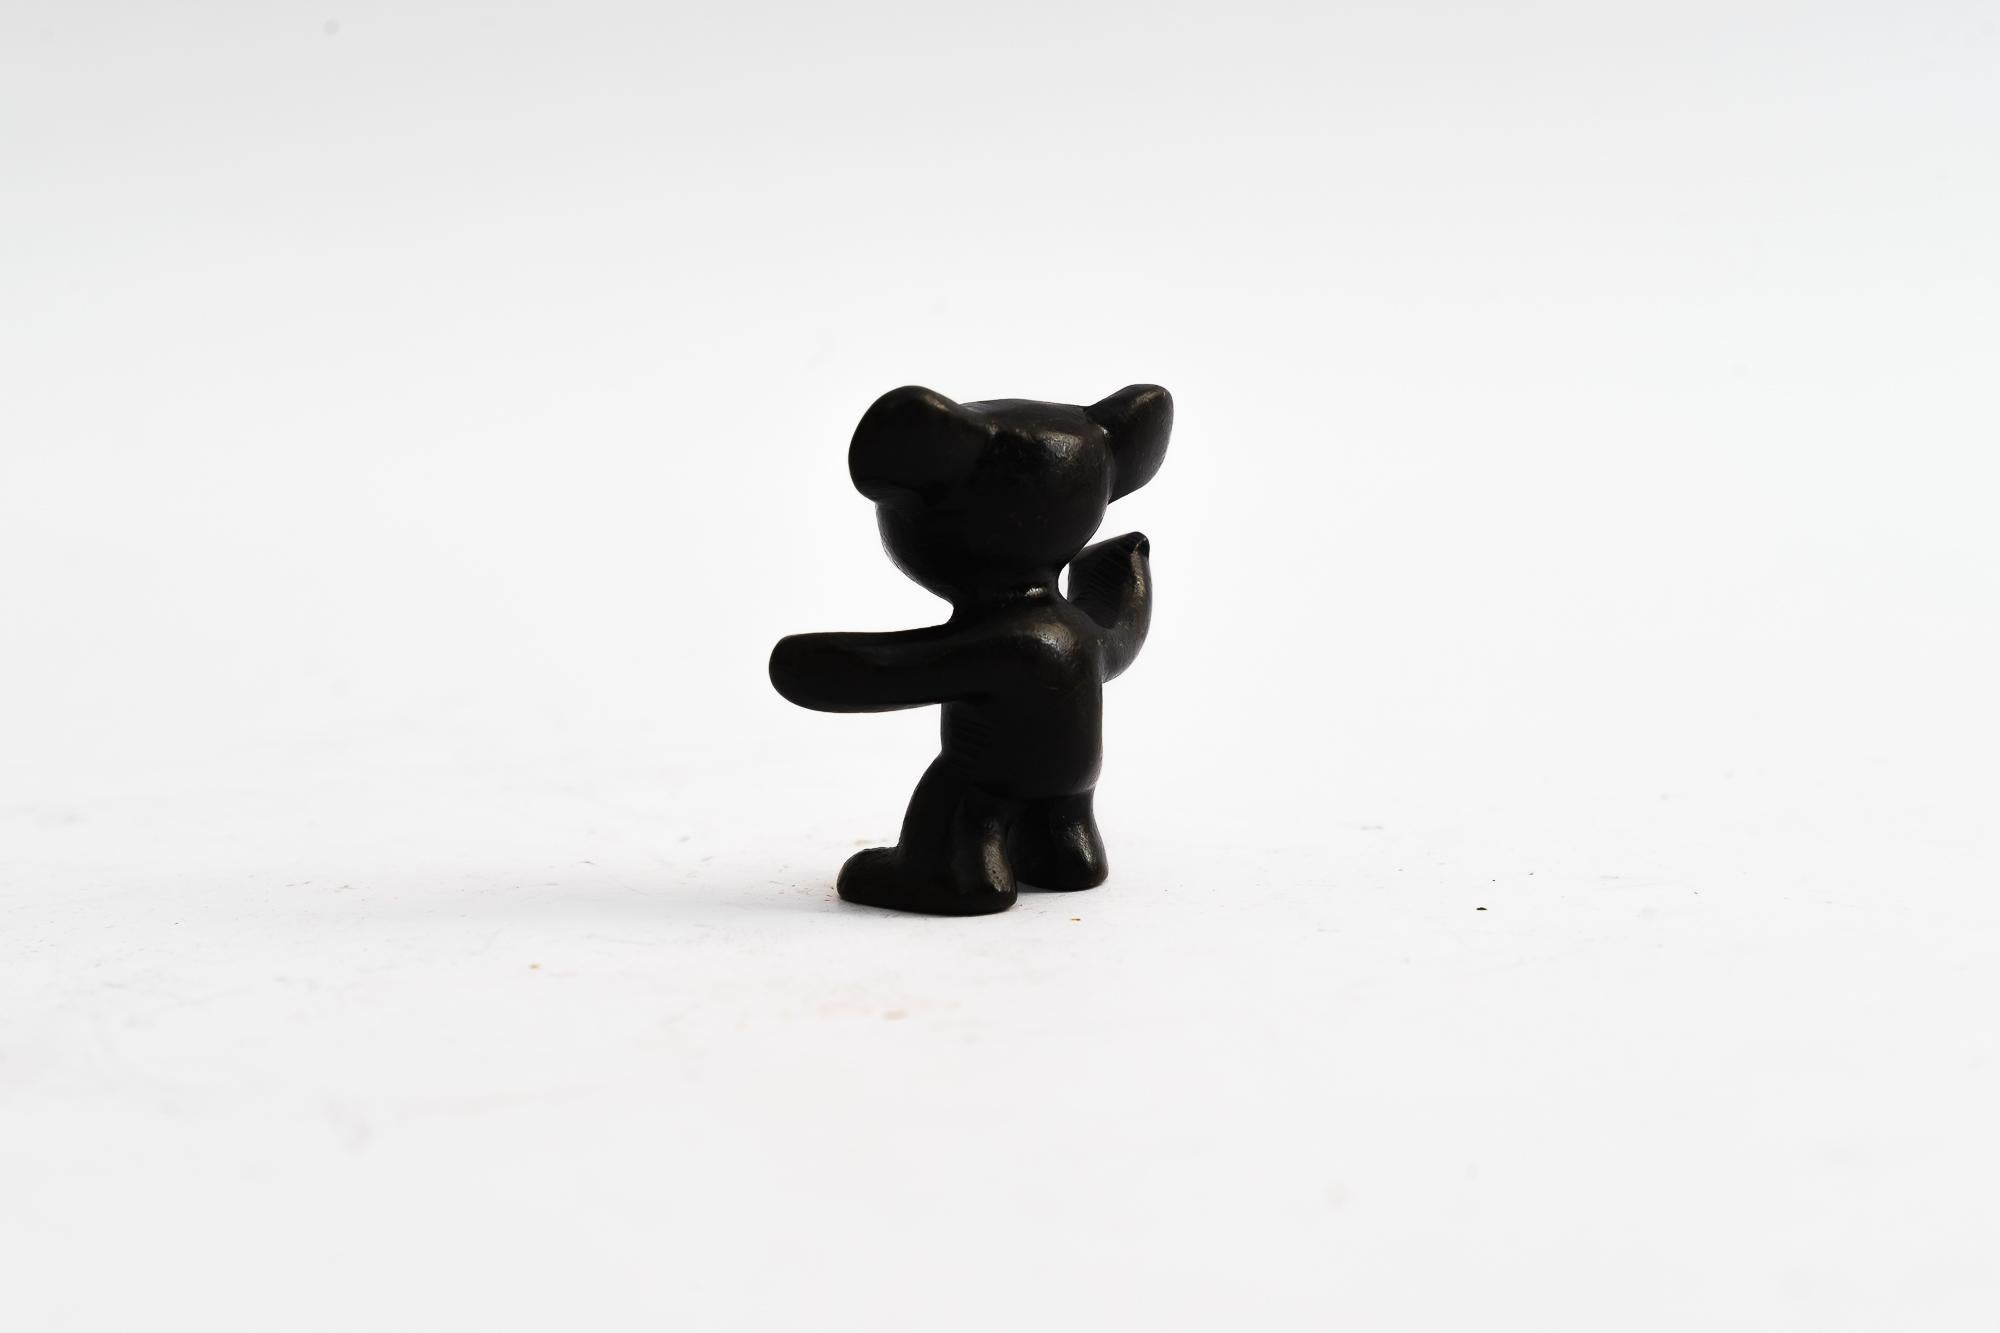 Small bear figurine by walter bosse vienna around 1950s
Original condition